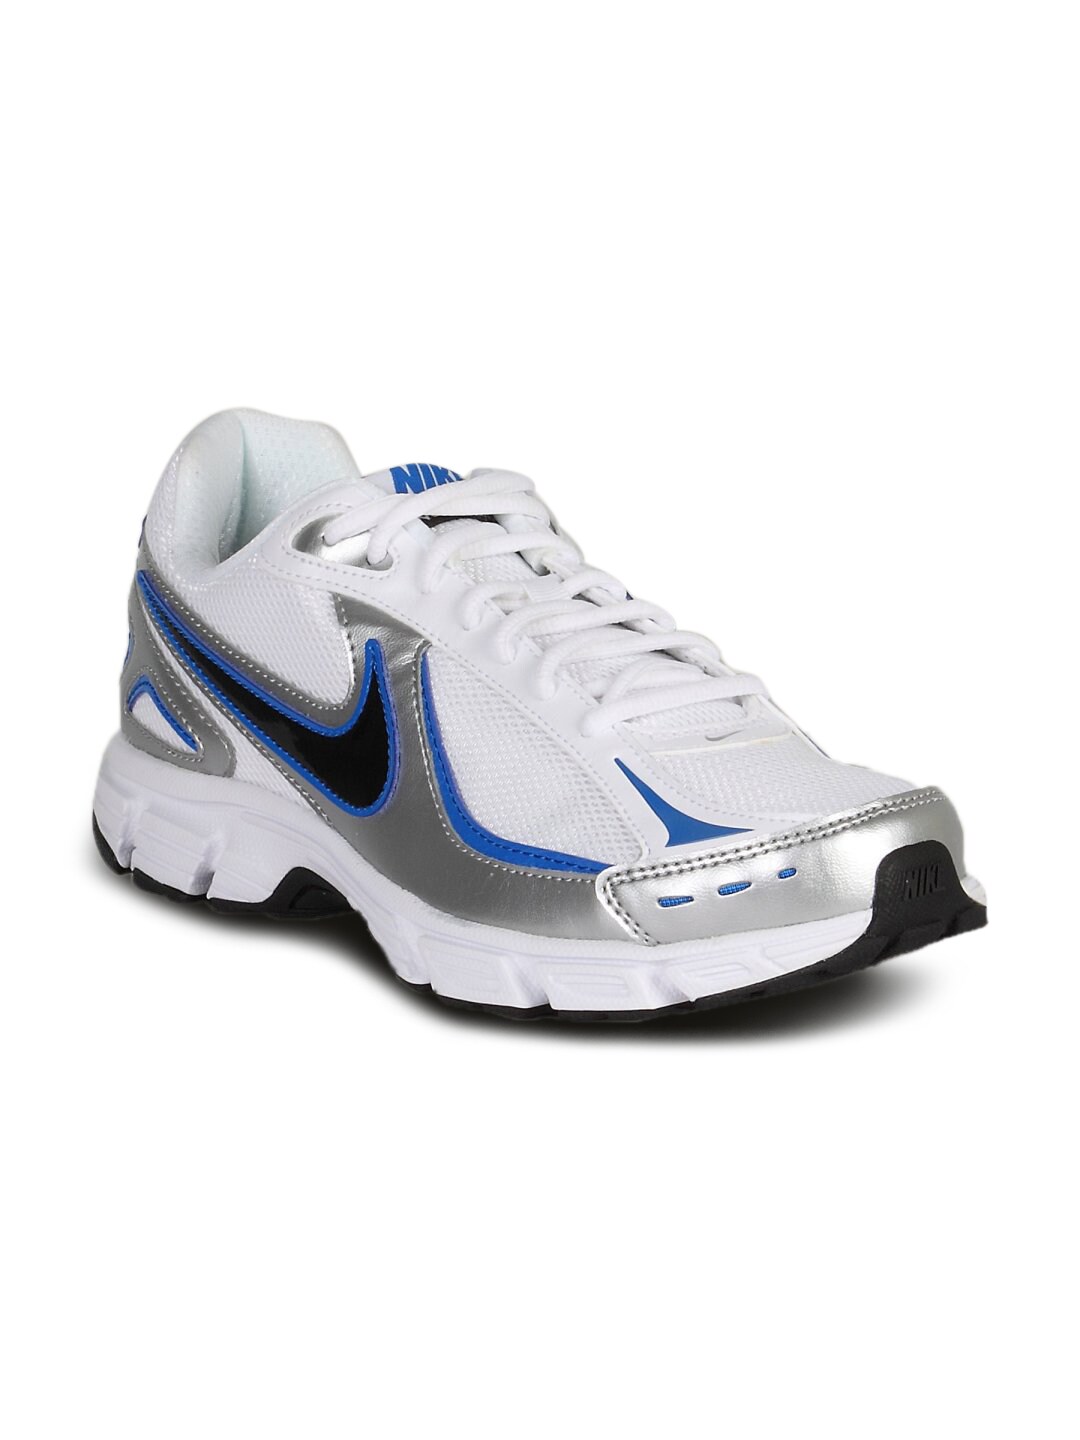 Nike Men's Incinera White Shoe